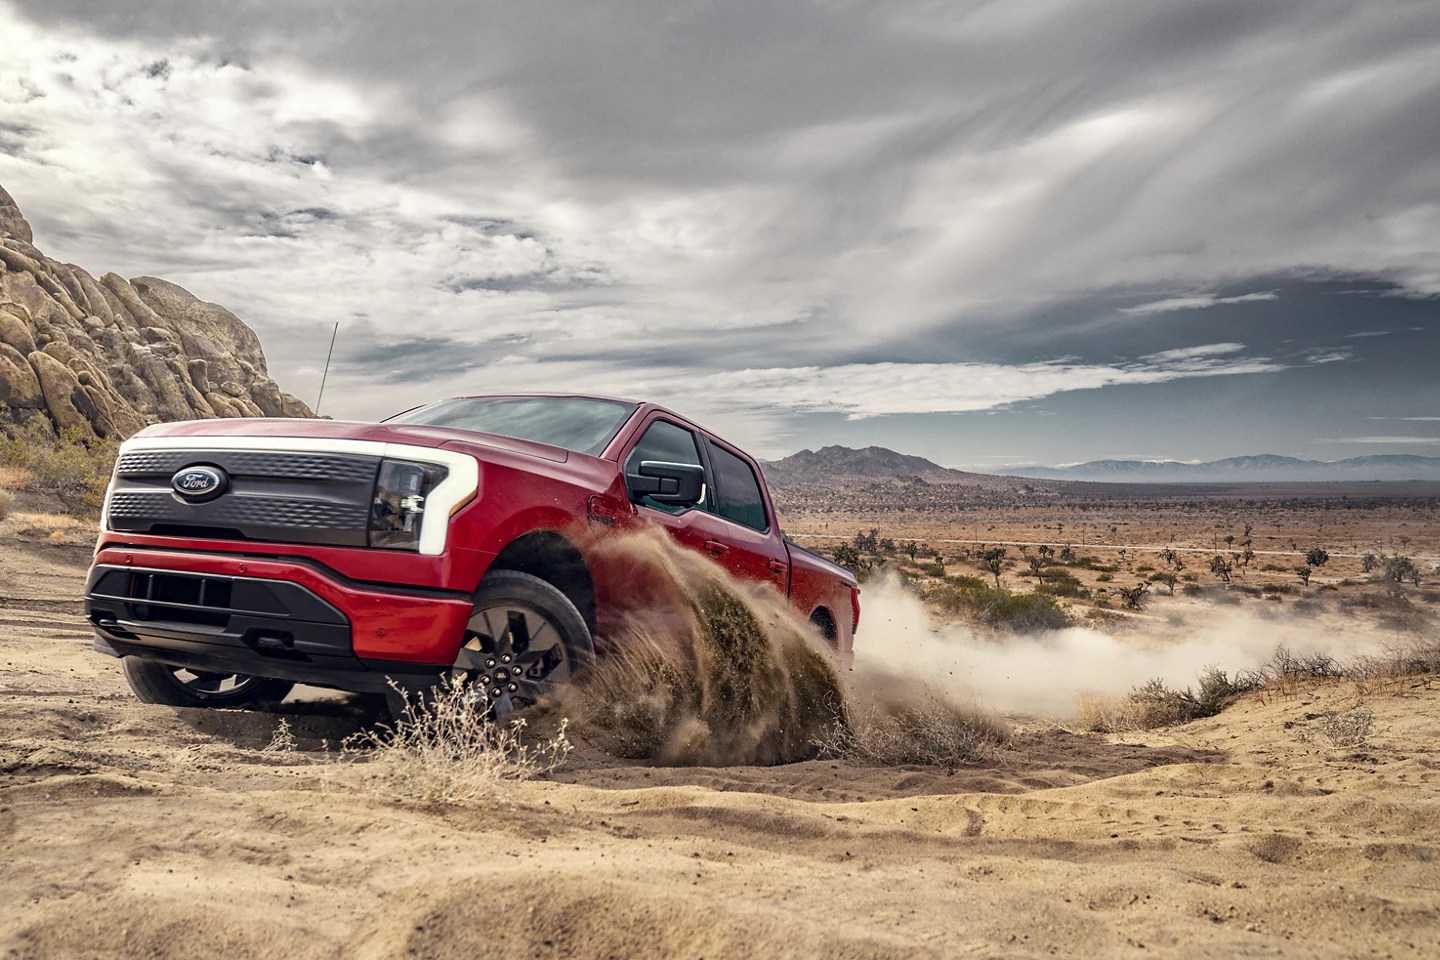 A 2022 Ford F-150 Lightning in red navigates a rugged terrain as an EV truck.